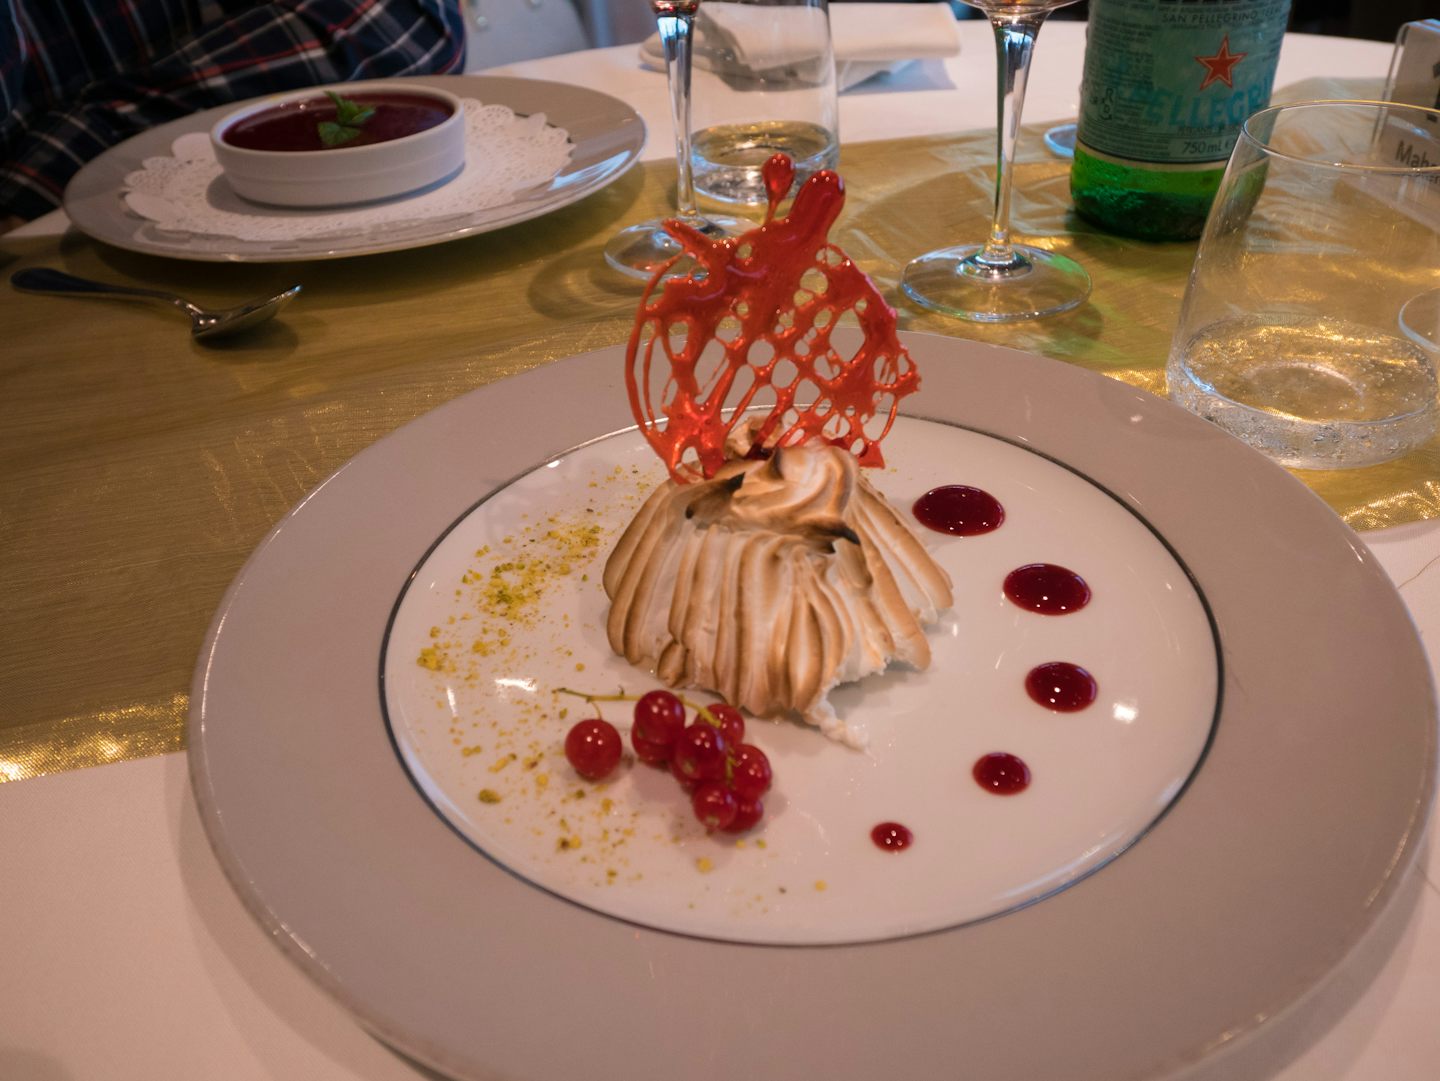 Dessert at the Yacht Club restaurant: pavlova.